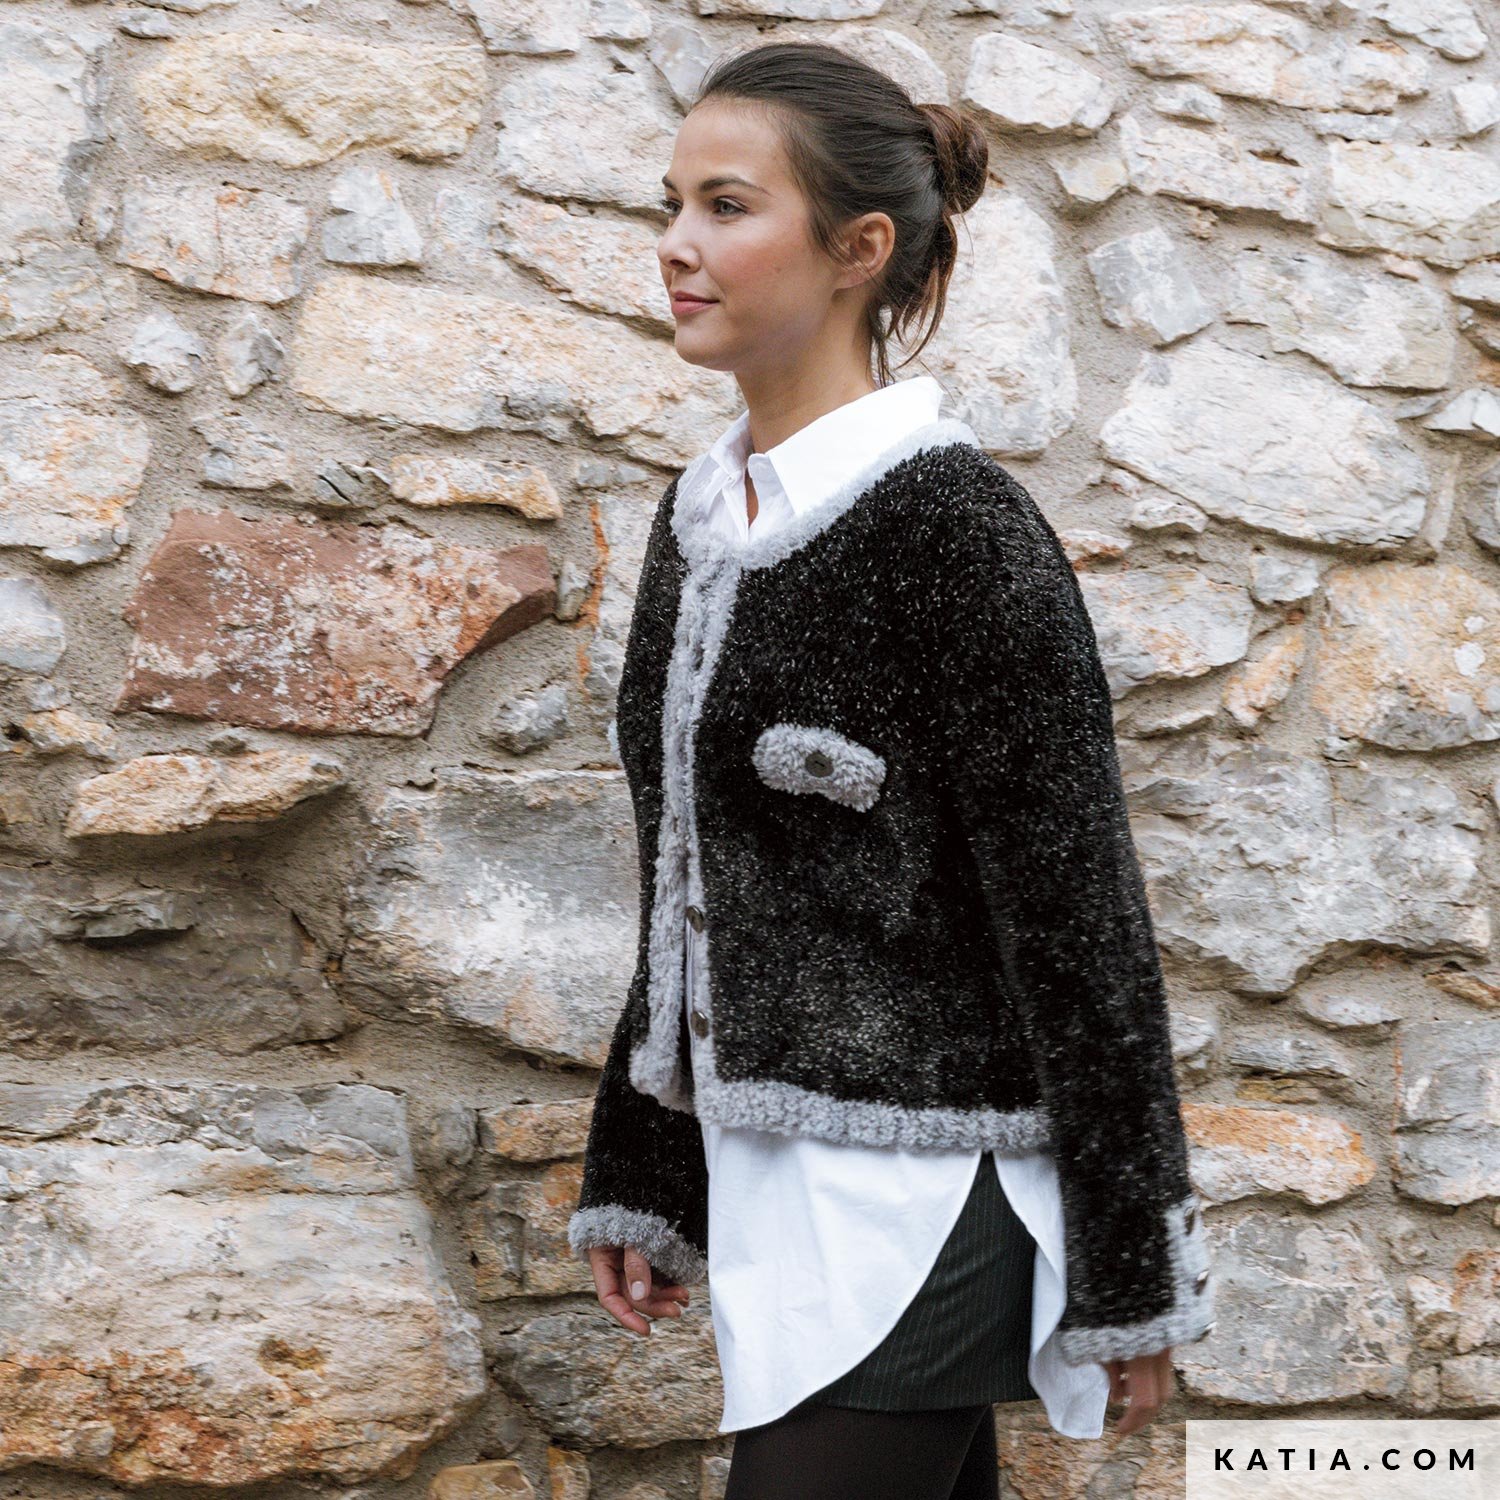 Chanel-inspired Tweed Jacket Patterns